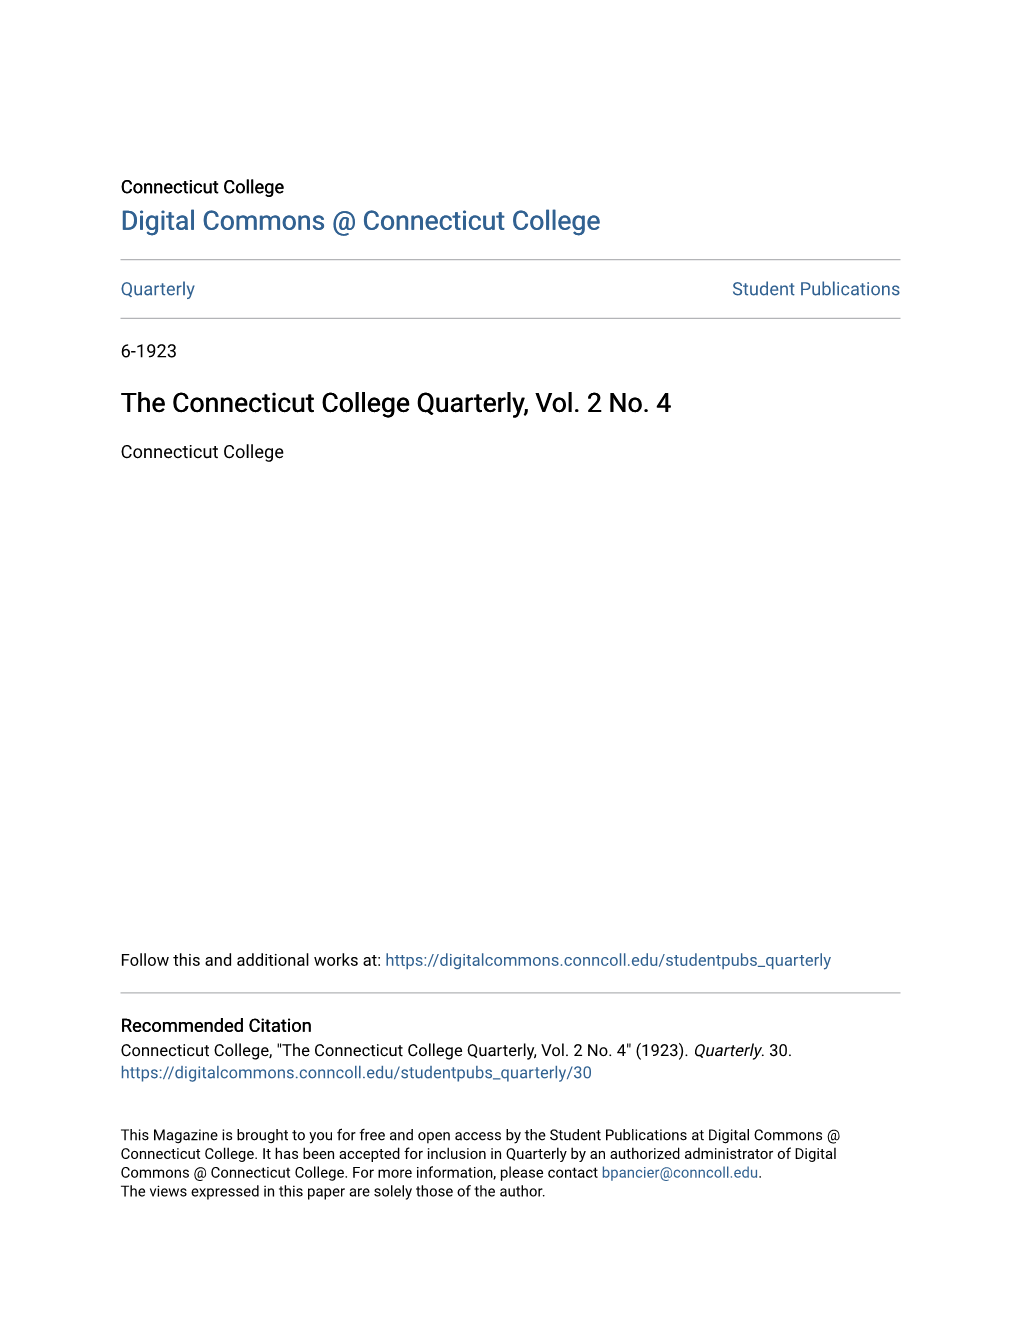 The Connecticut College Quarterly, Vol. 2 No. 4